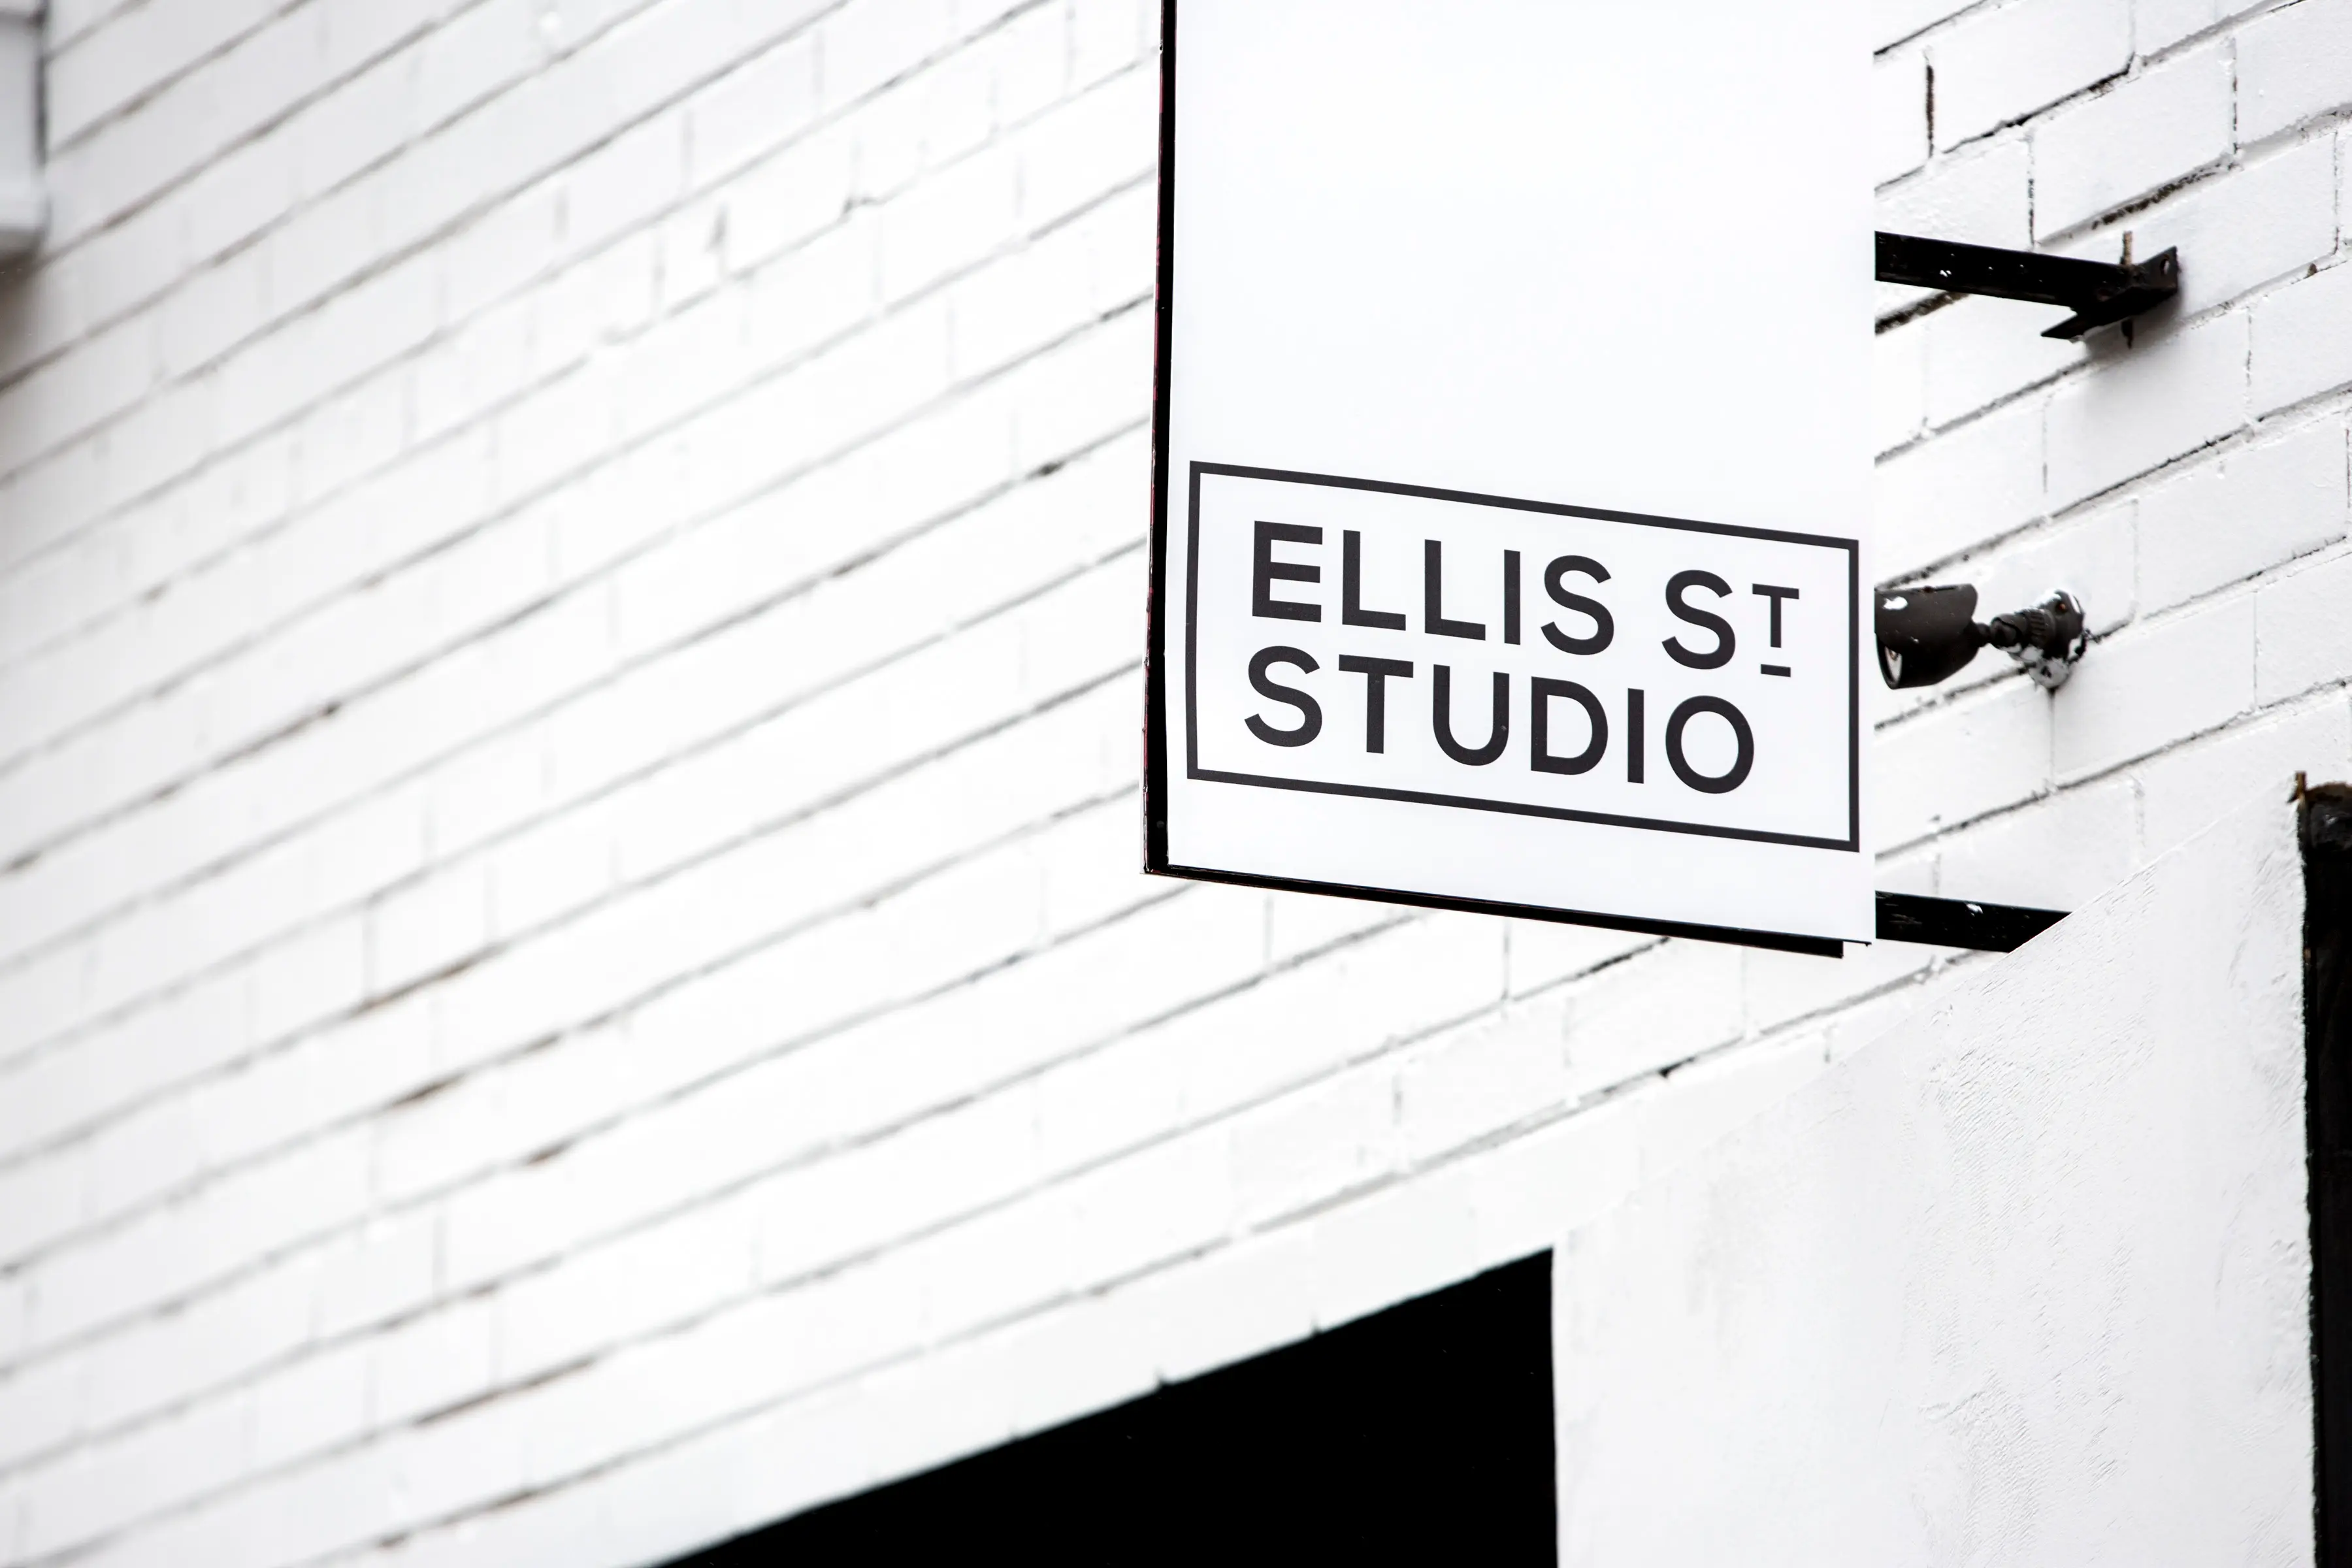 Ellis Street Studio - hospitality interior design, event management - Chapel St, South Yarra, Australia